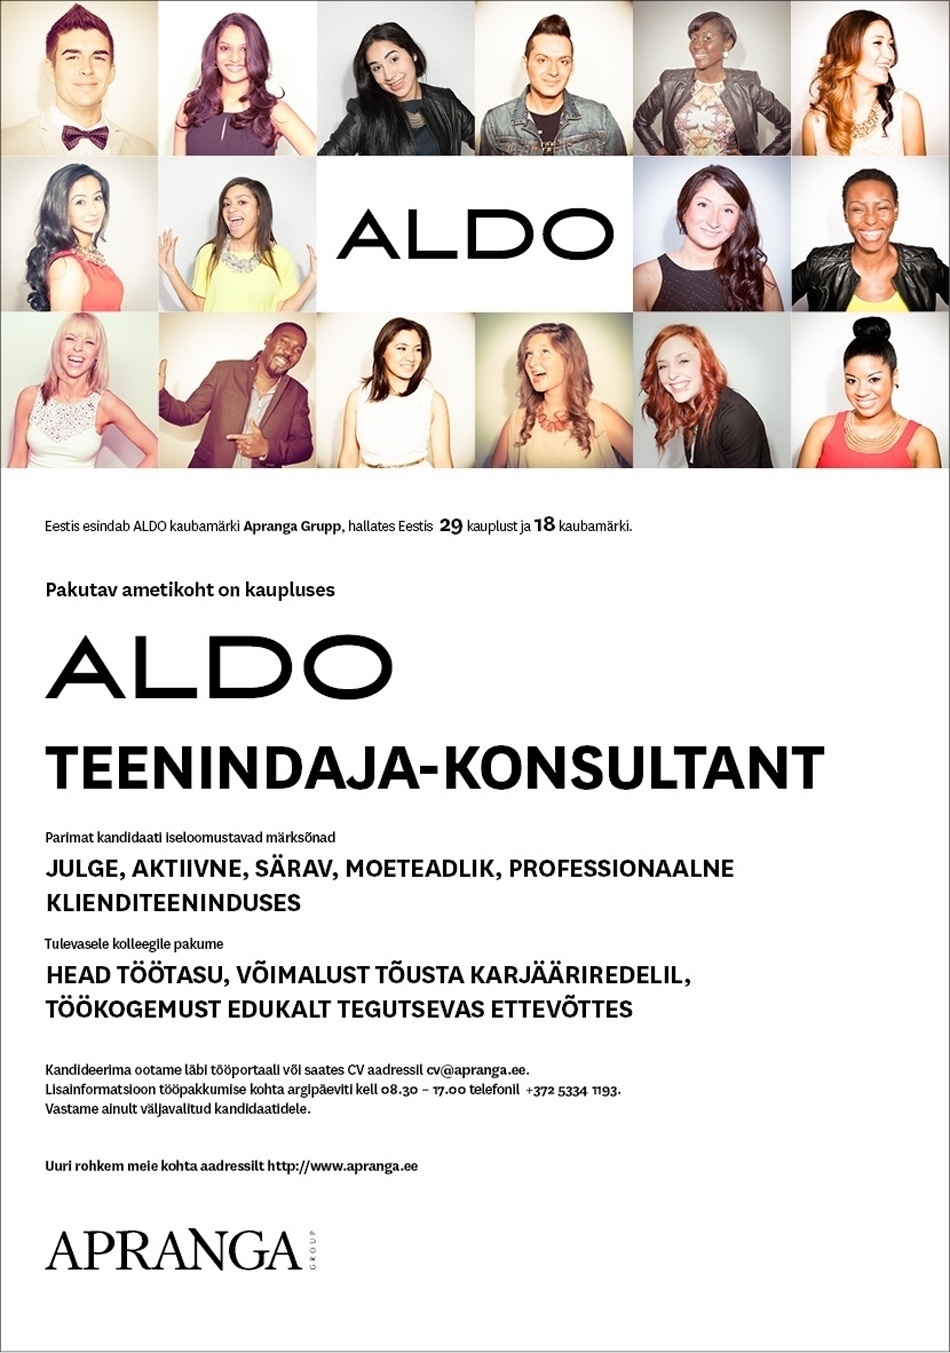 Apranga Estonia OÜ ALDO müügikonsultant